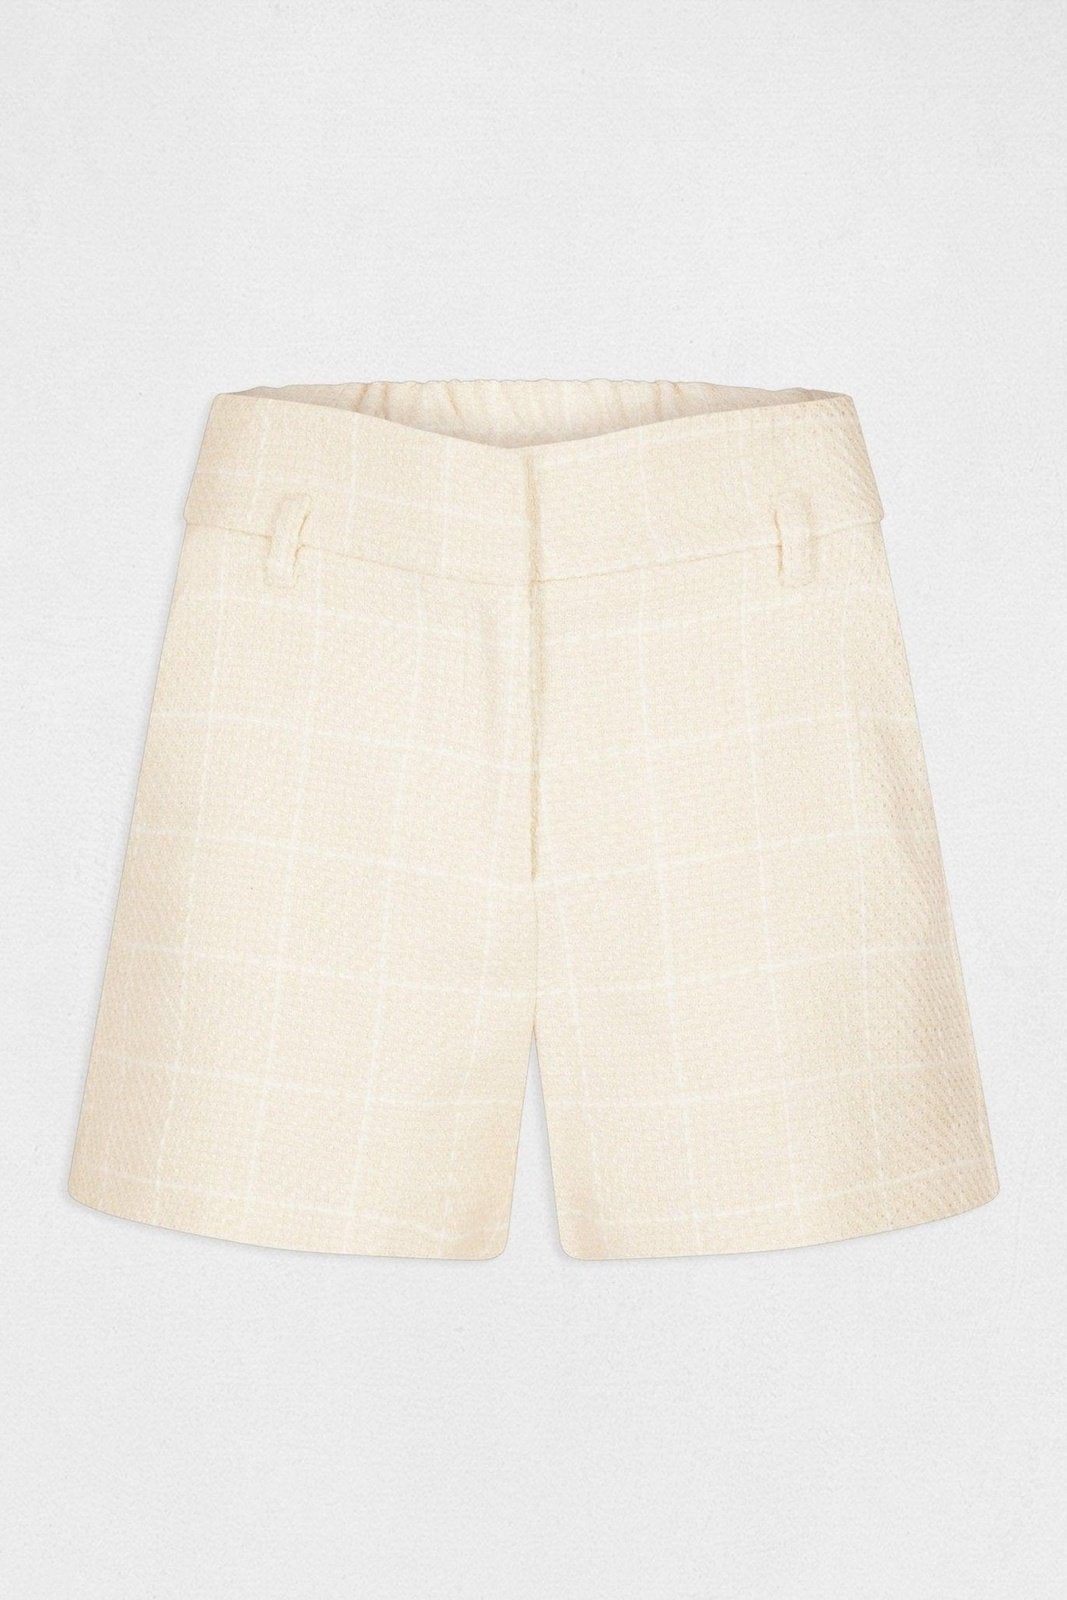 MORGAN - מכנסיים קצרים עם הדפס משבצות בצבע שמנת - MASHBIR//365